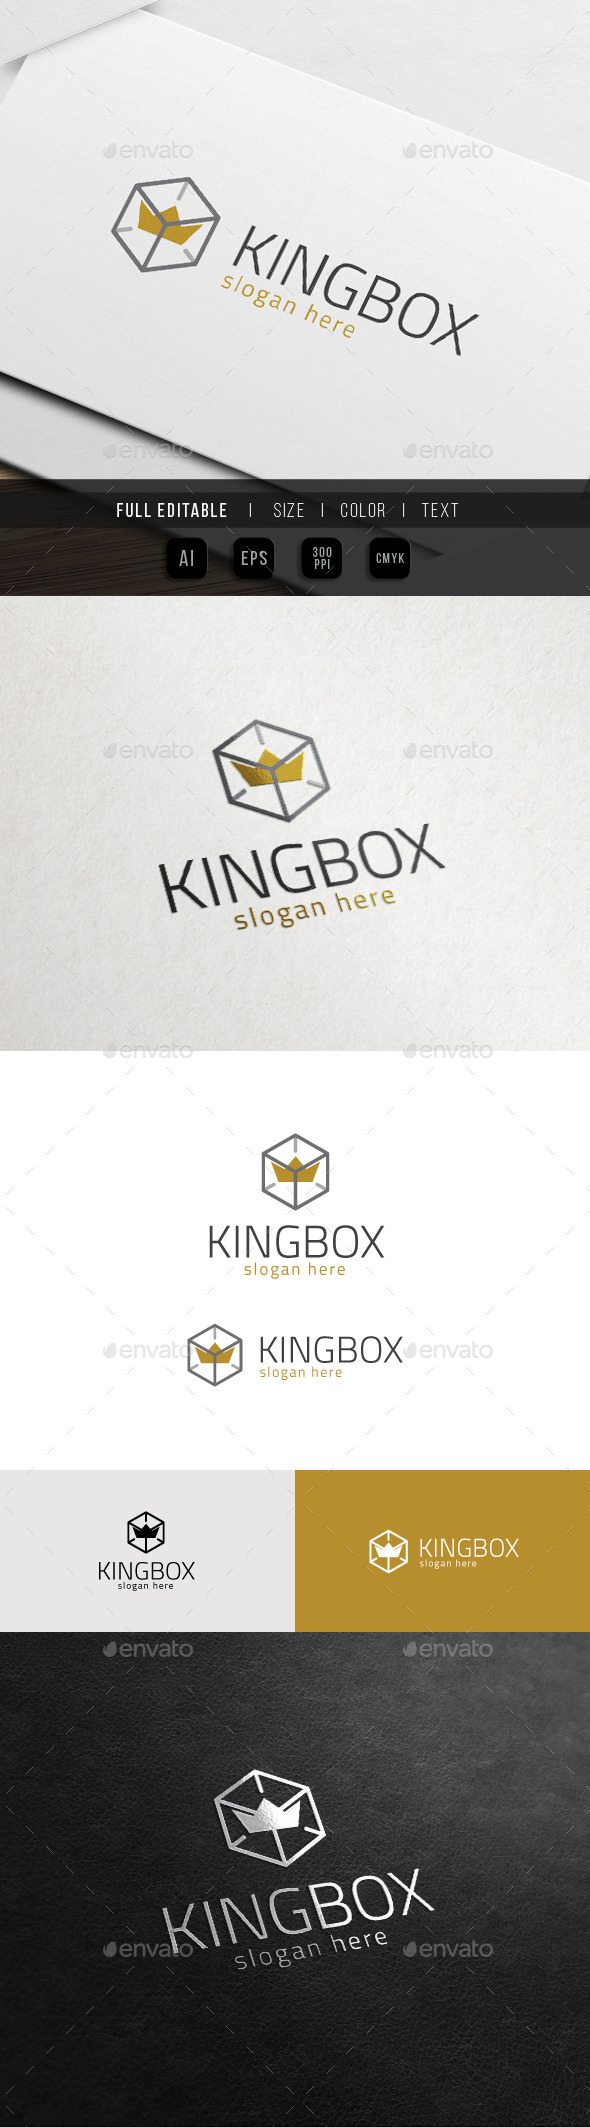 King Box - Royal Hosting Logo